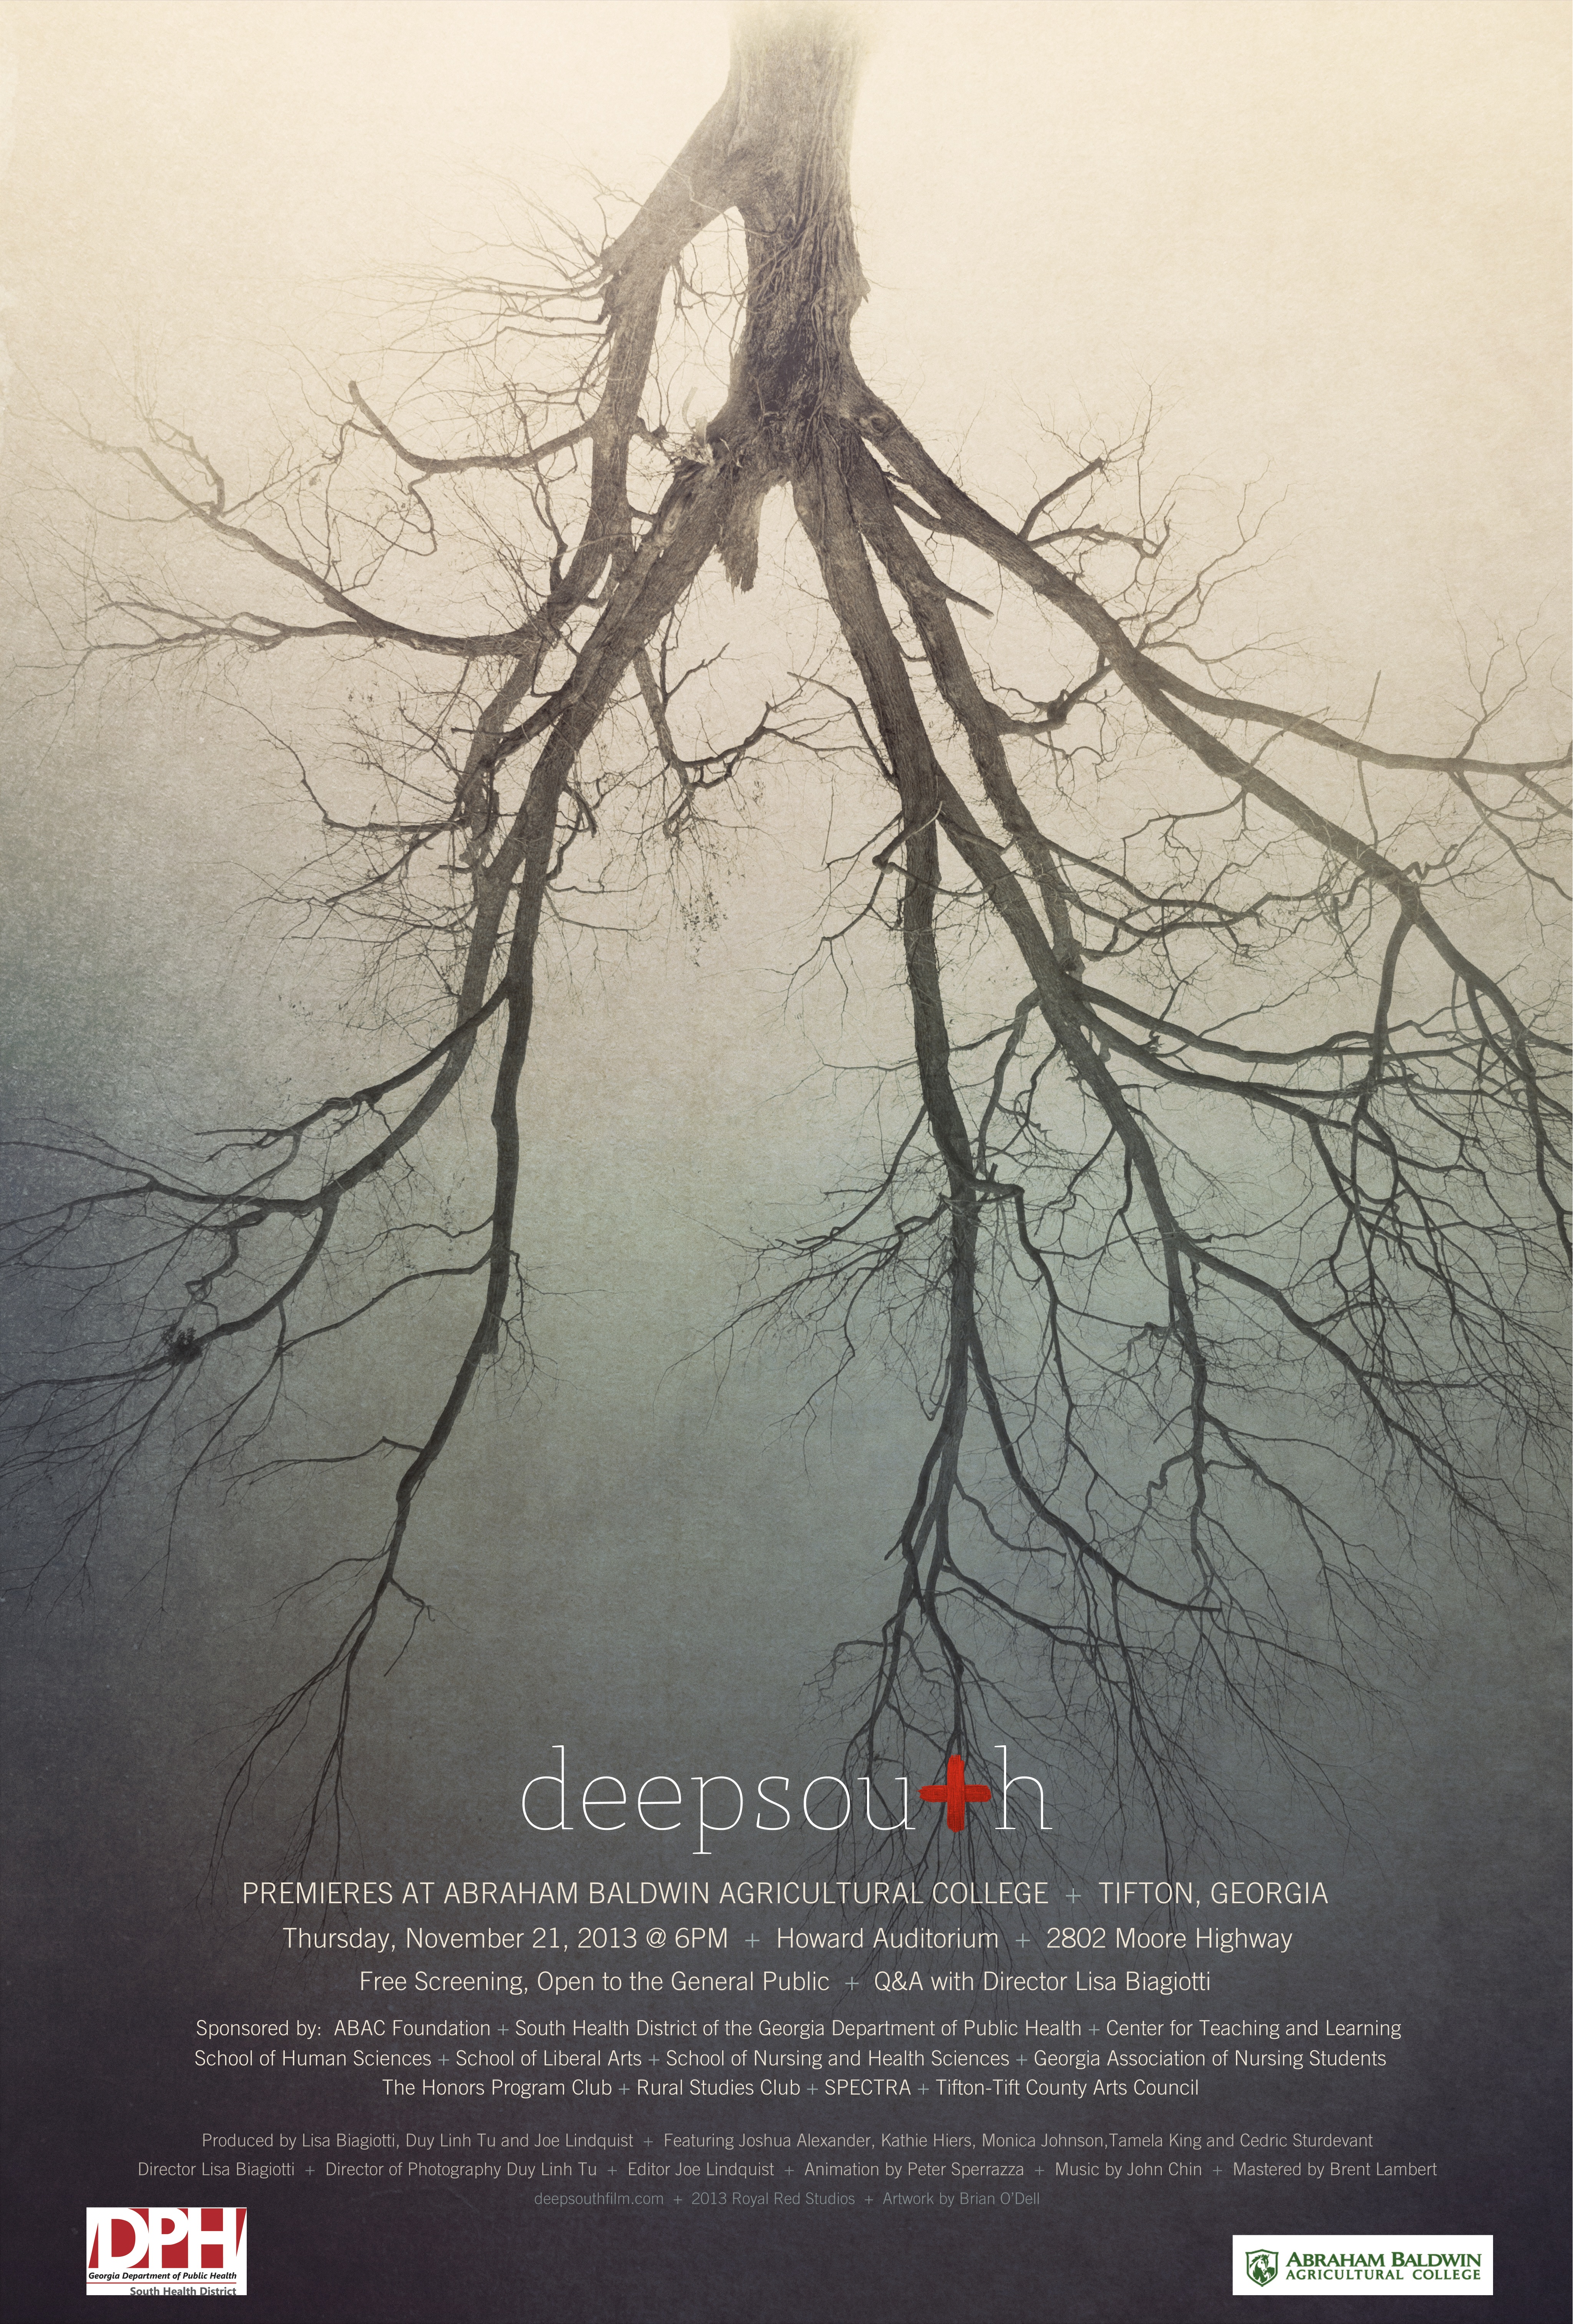 deepsouth – a HIV documentary